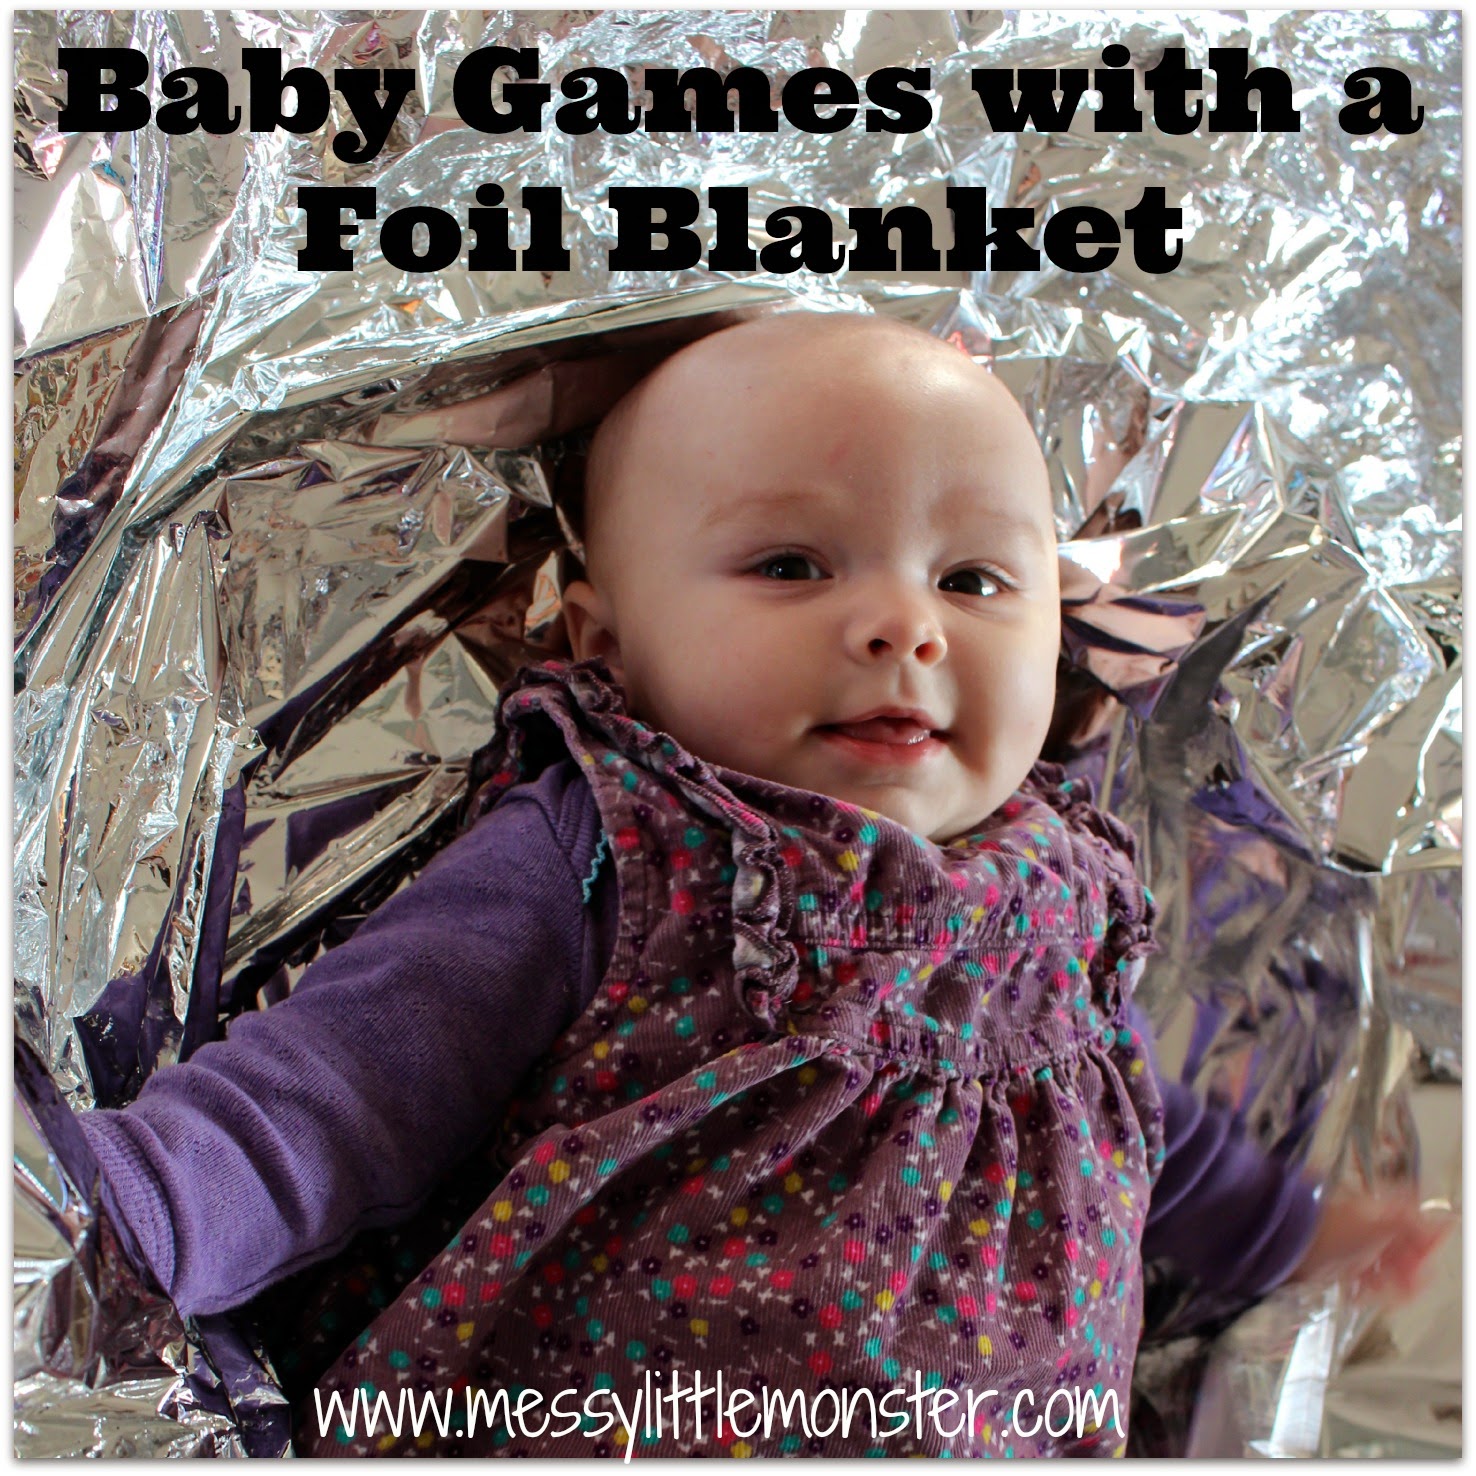 http://www.messylittlemonster.com/2014/11/baby-games-with-foil-blanket-0-6-months.html